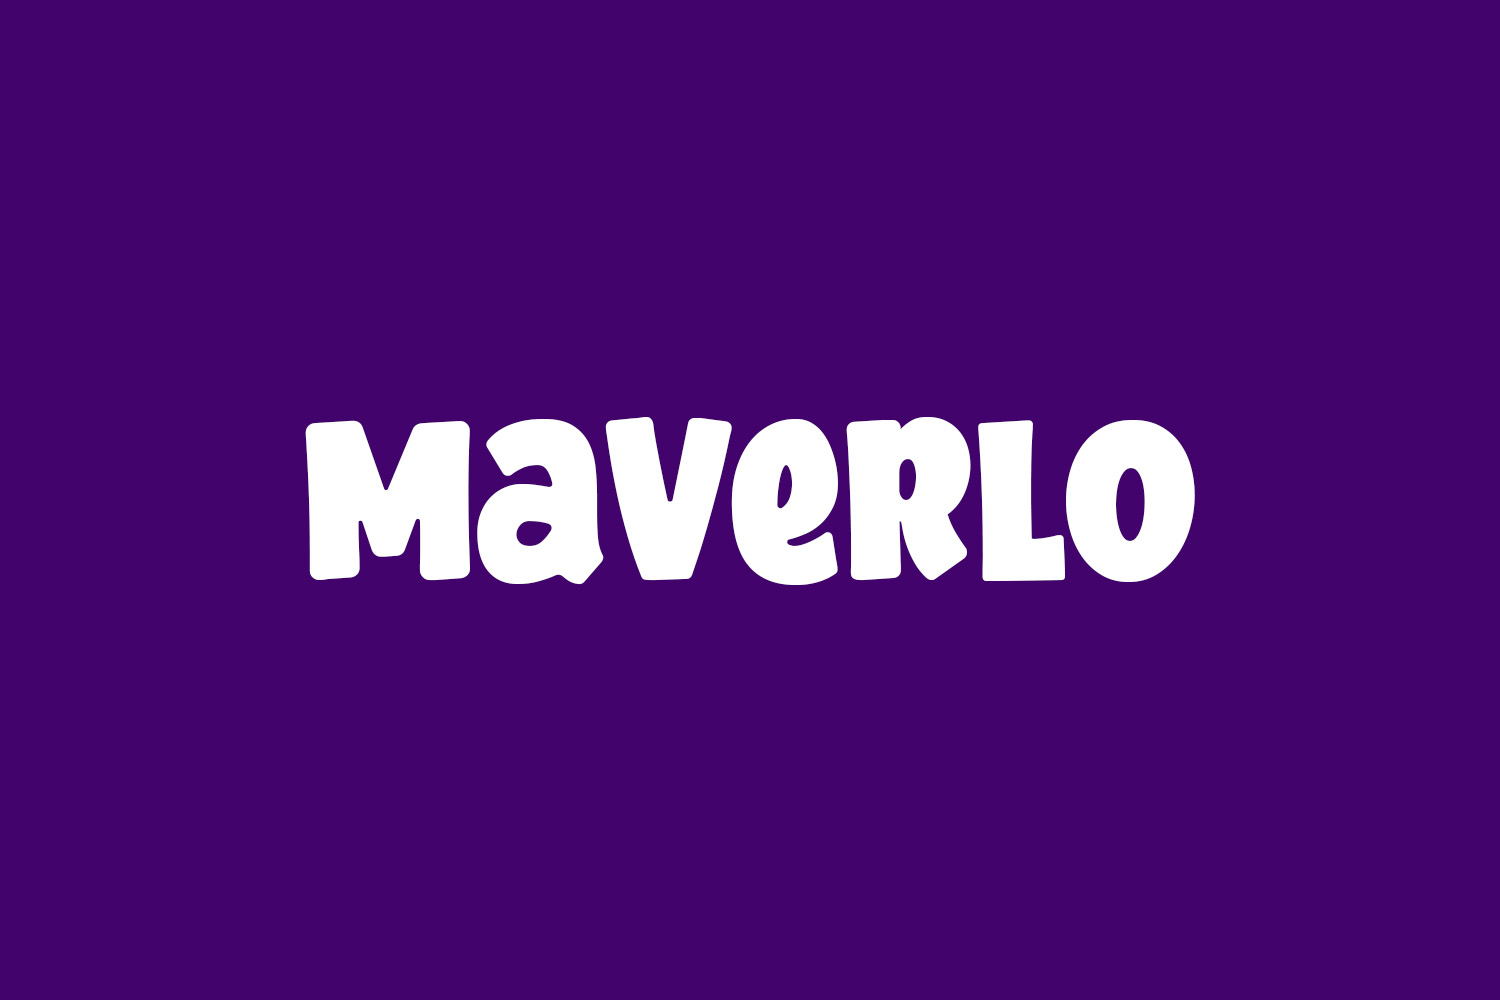 Maverlo Free Font